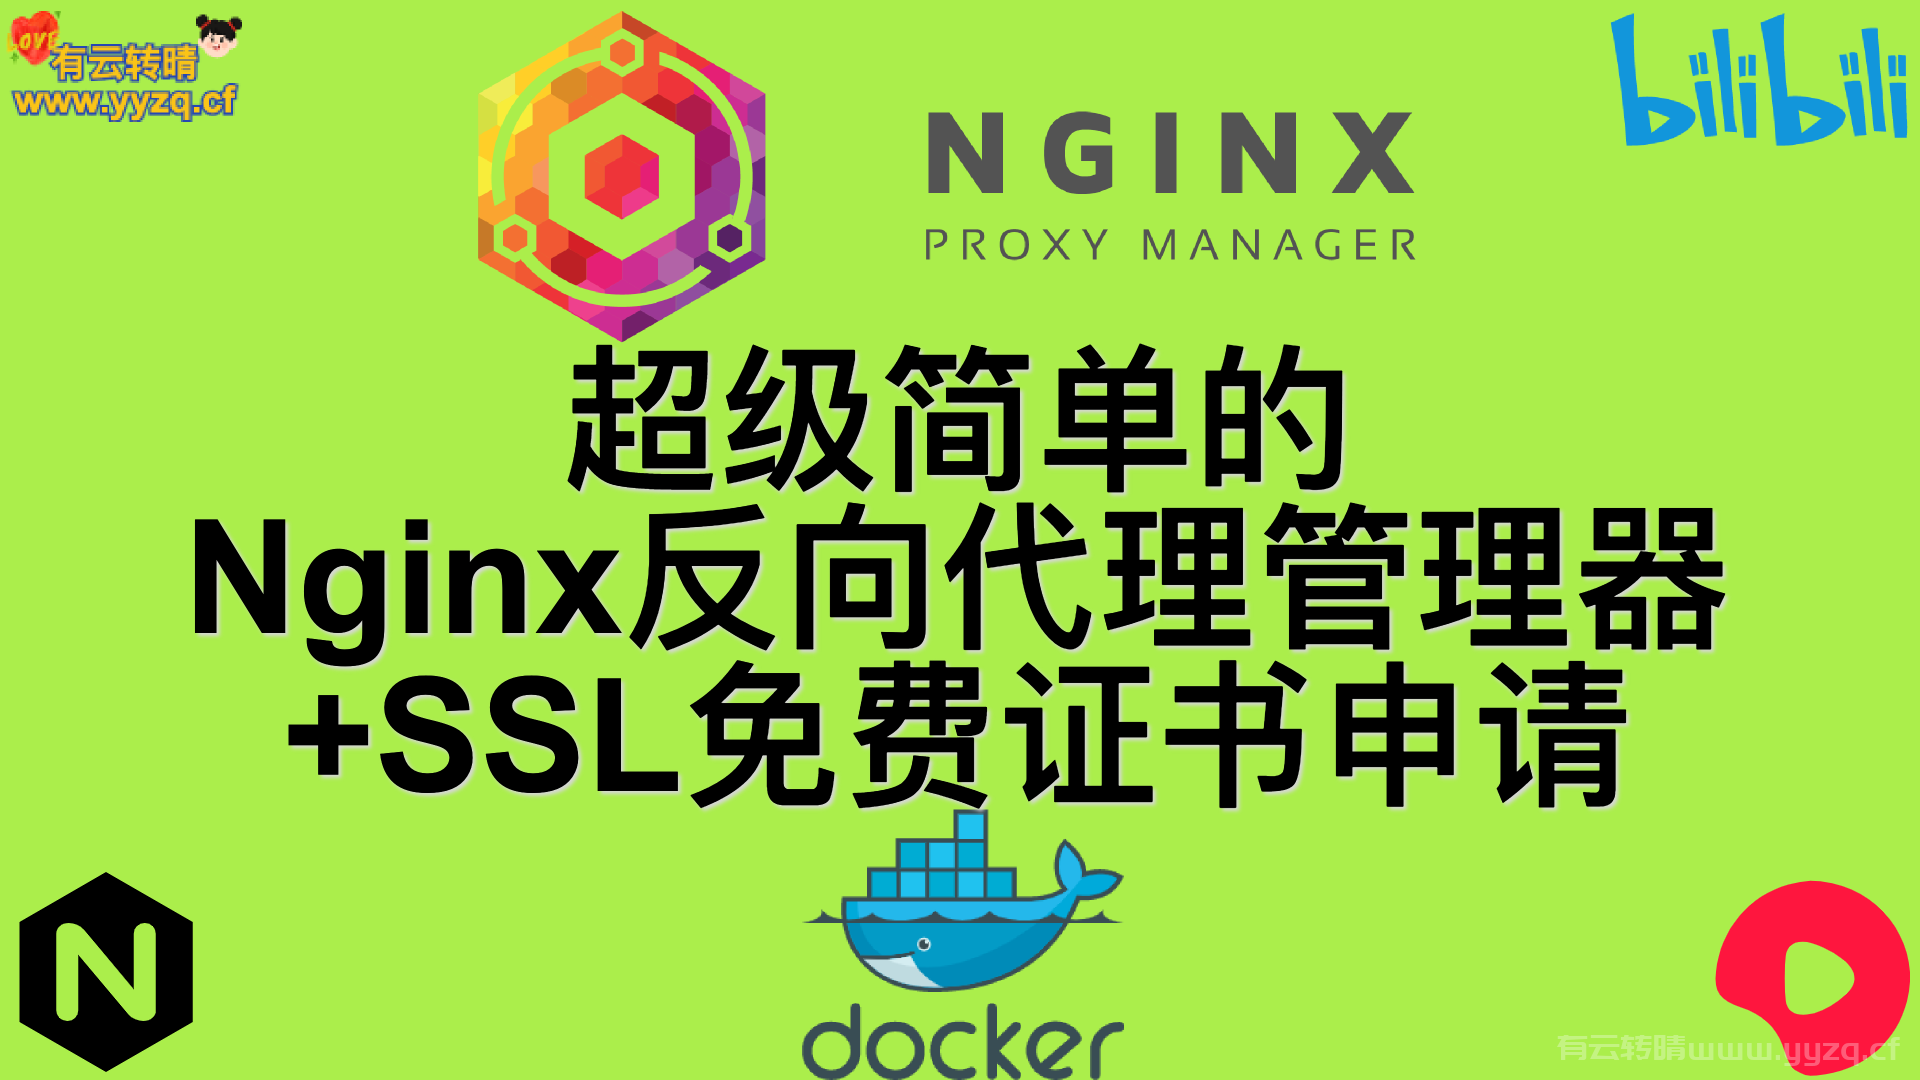 NginxProxyManager一款使用超级简单的Nginx反向代理管理器+SSL证书申请，一学就会